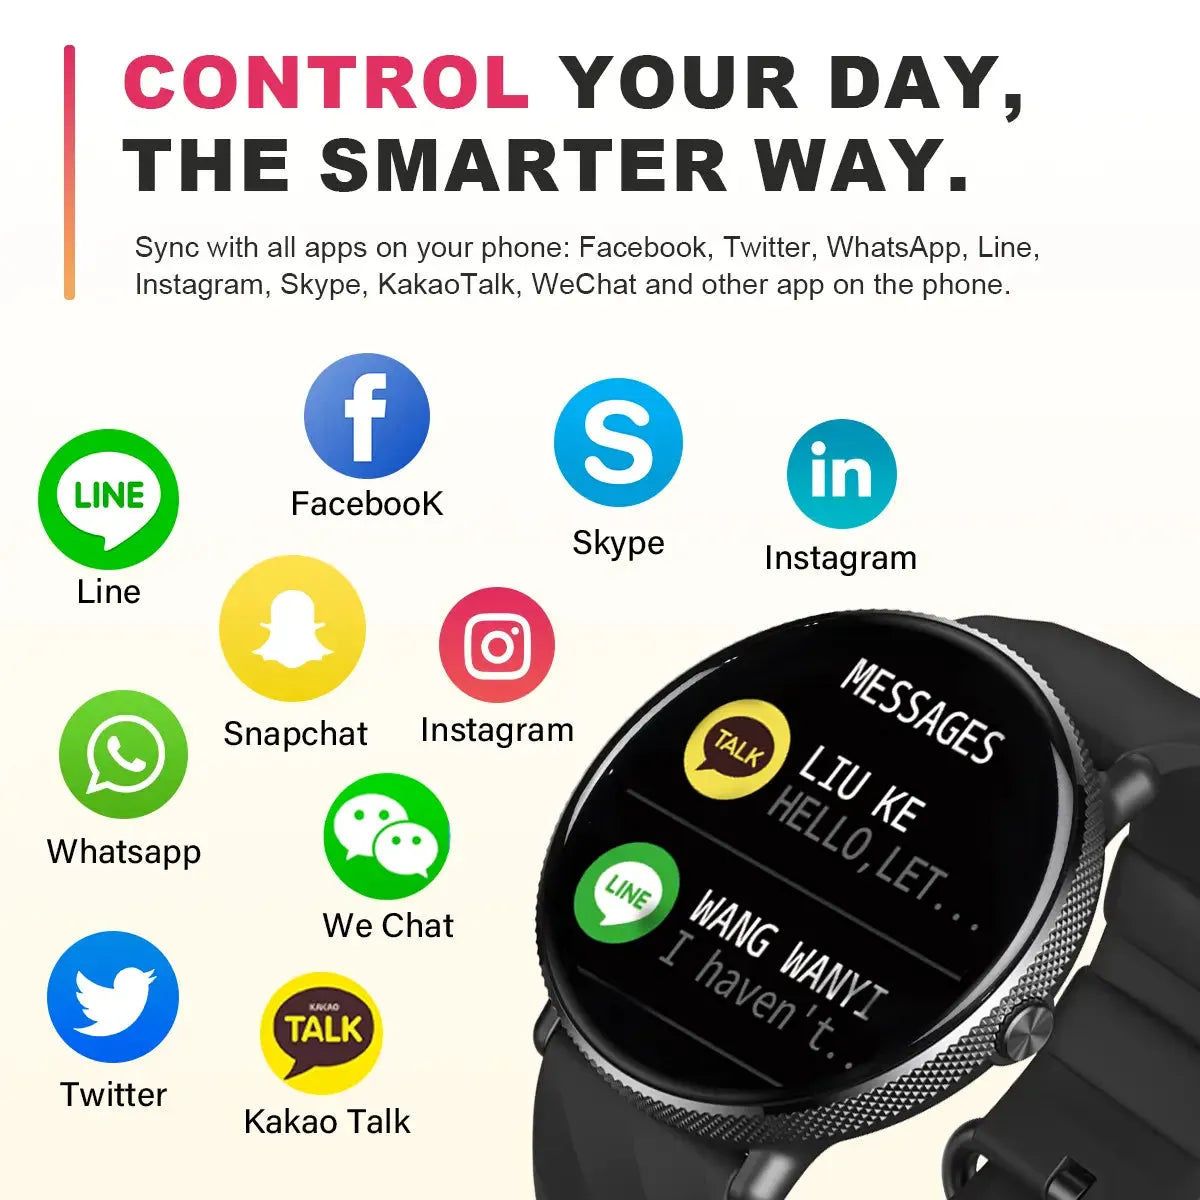 Tousains smartwatch P2 with app notification